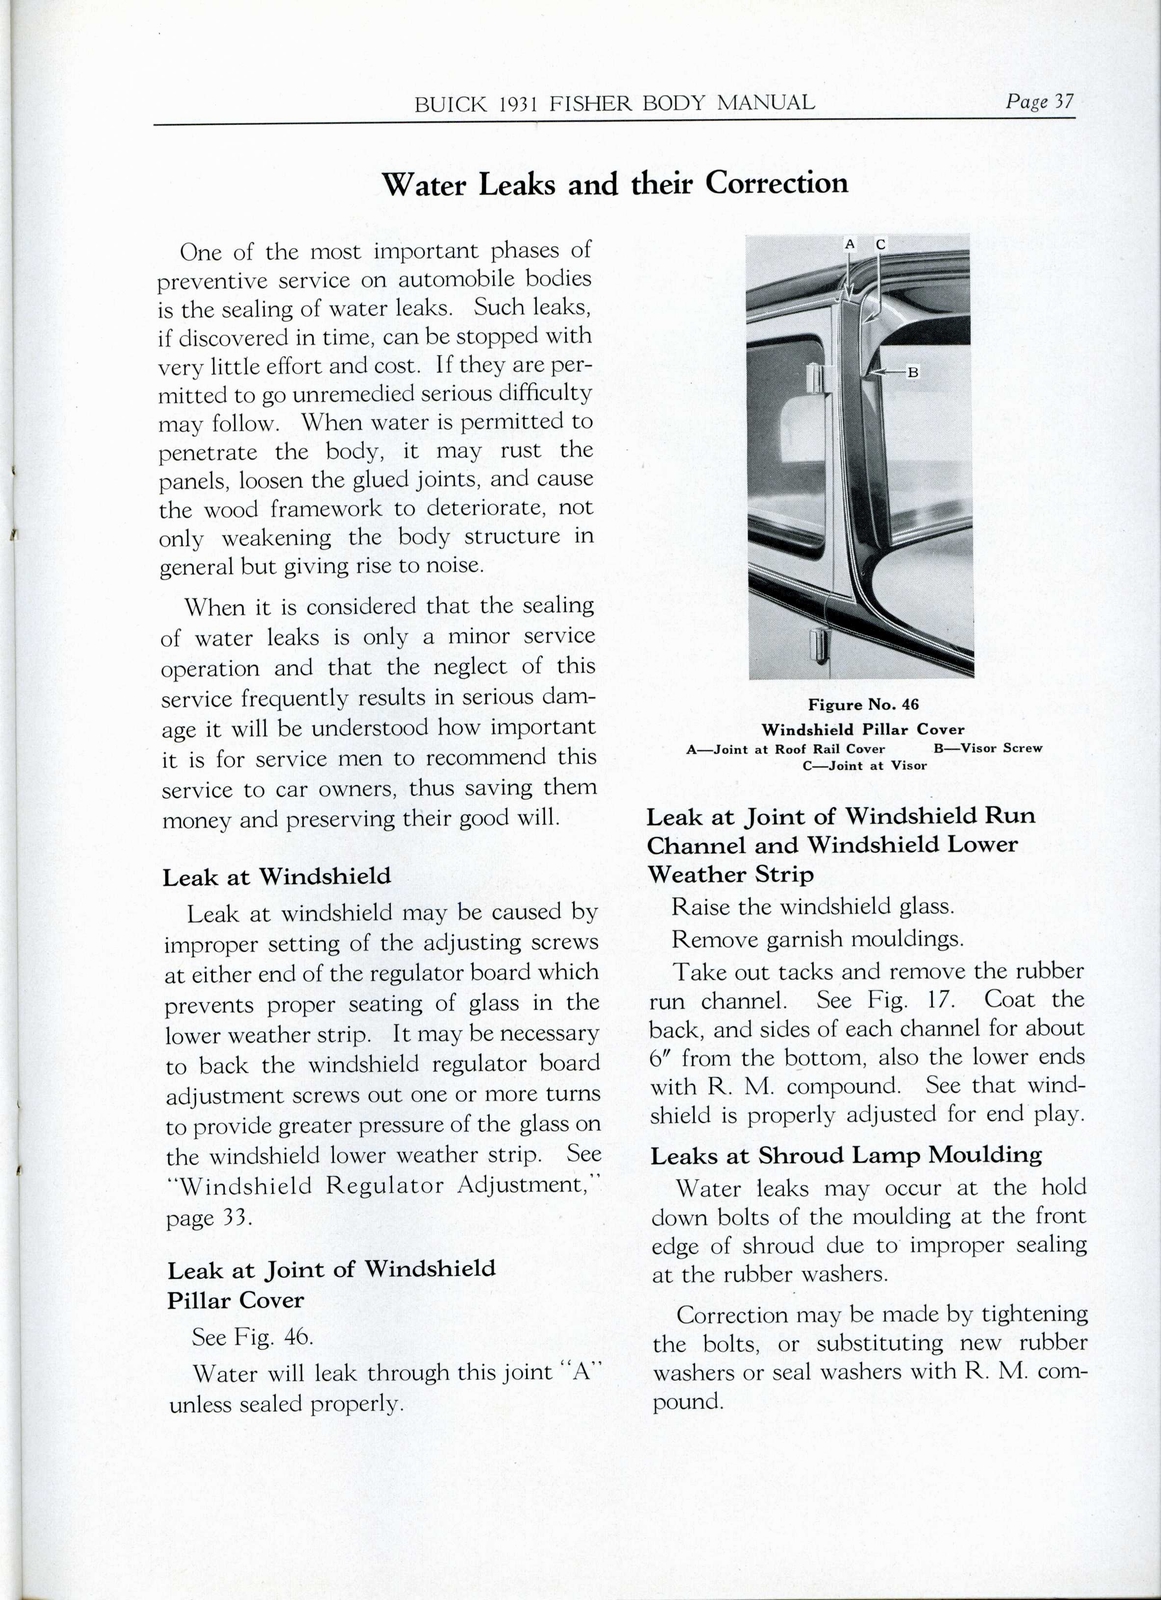 n_1931 Buick Fisher Body Manual-37.jpg